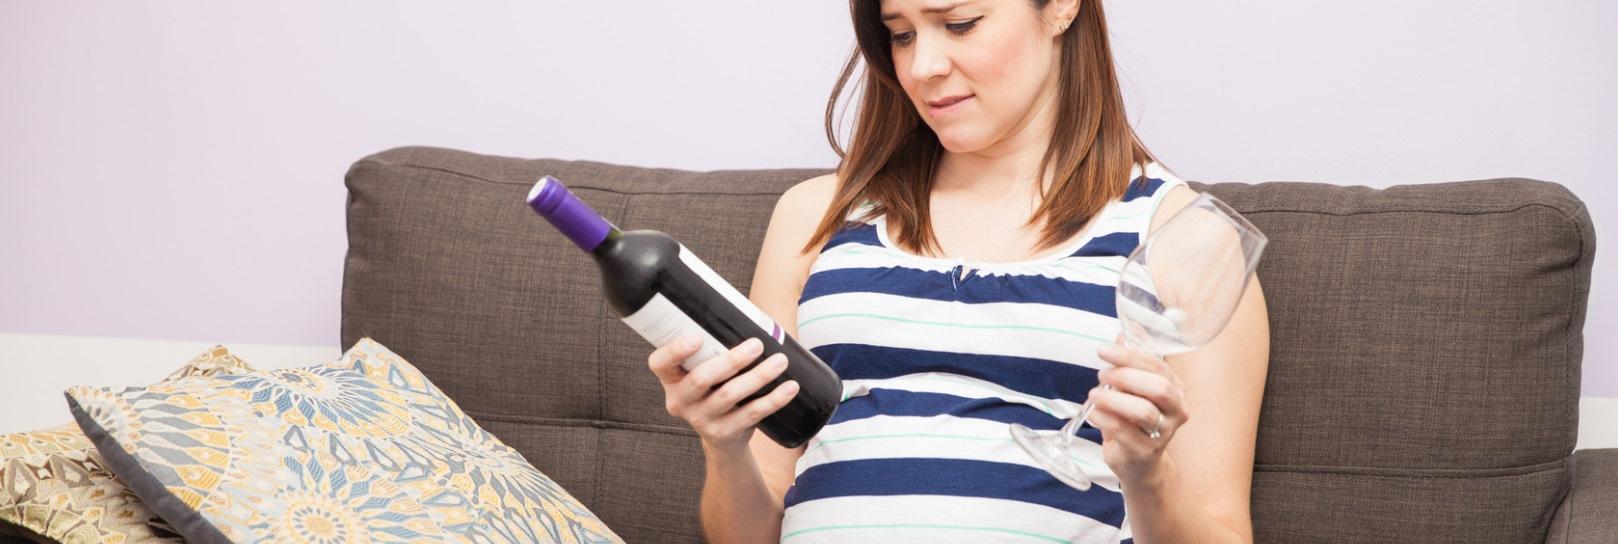 alcool-durante-a-gravidez-quais-sao-os-limites.jpeg